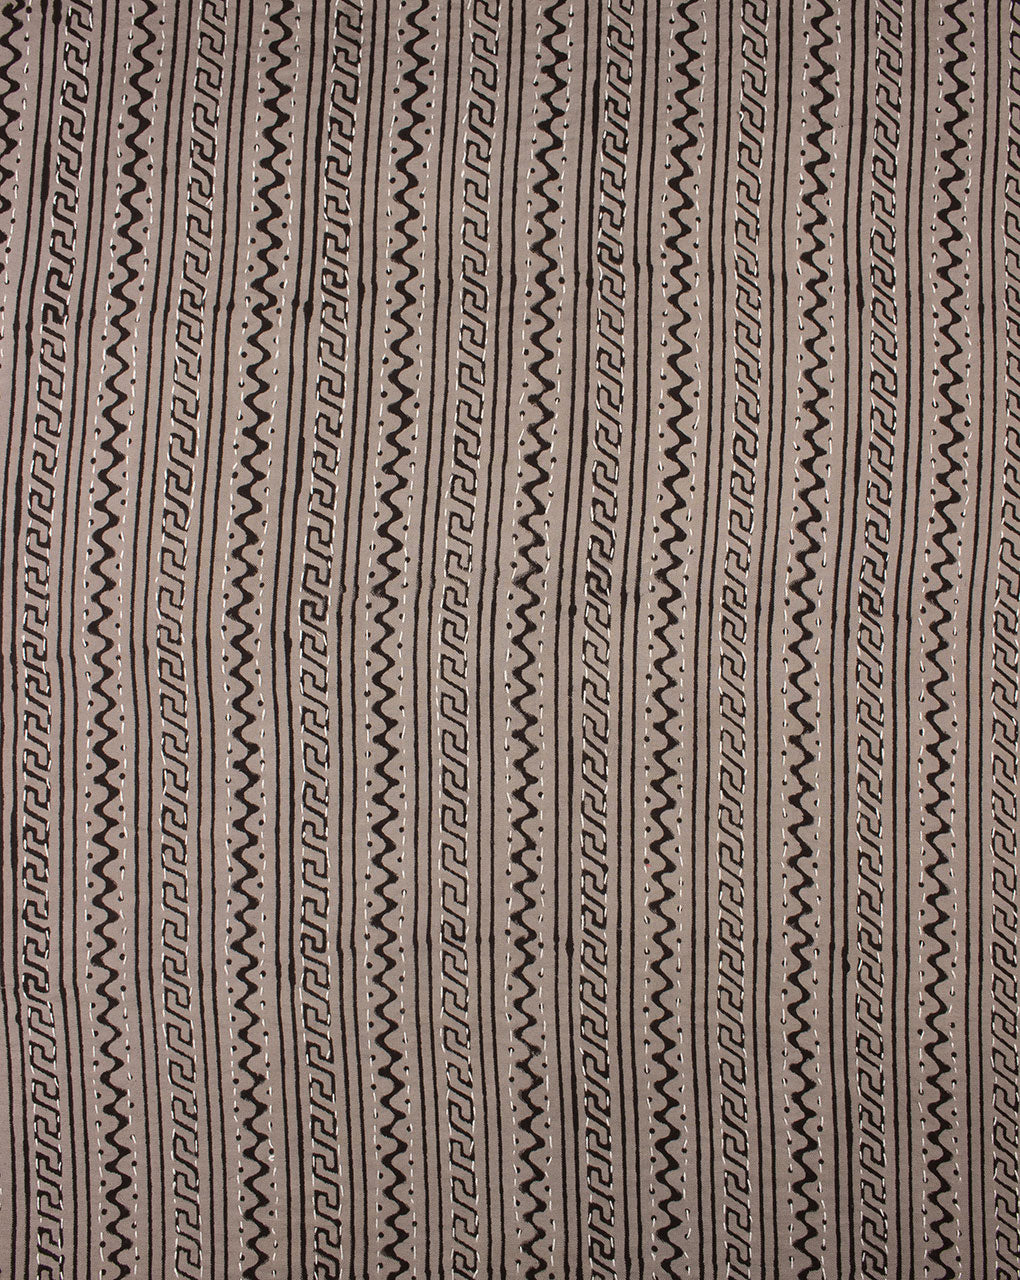 Hand Block Hand Kantha Pure Handloom Twill Cotton Fabric - Fabriclore.com